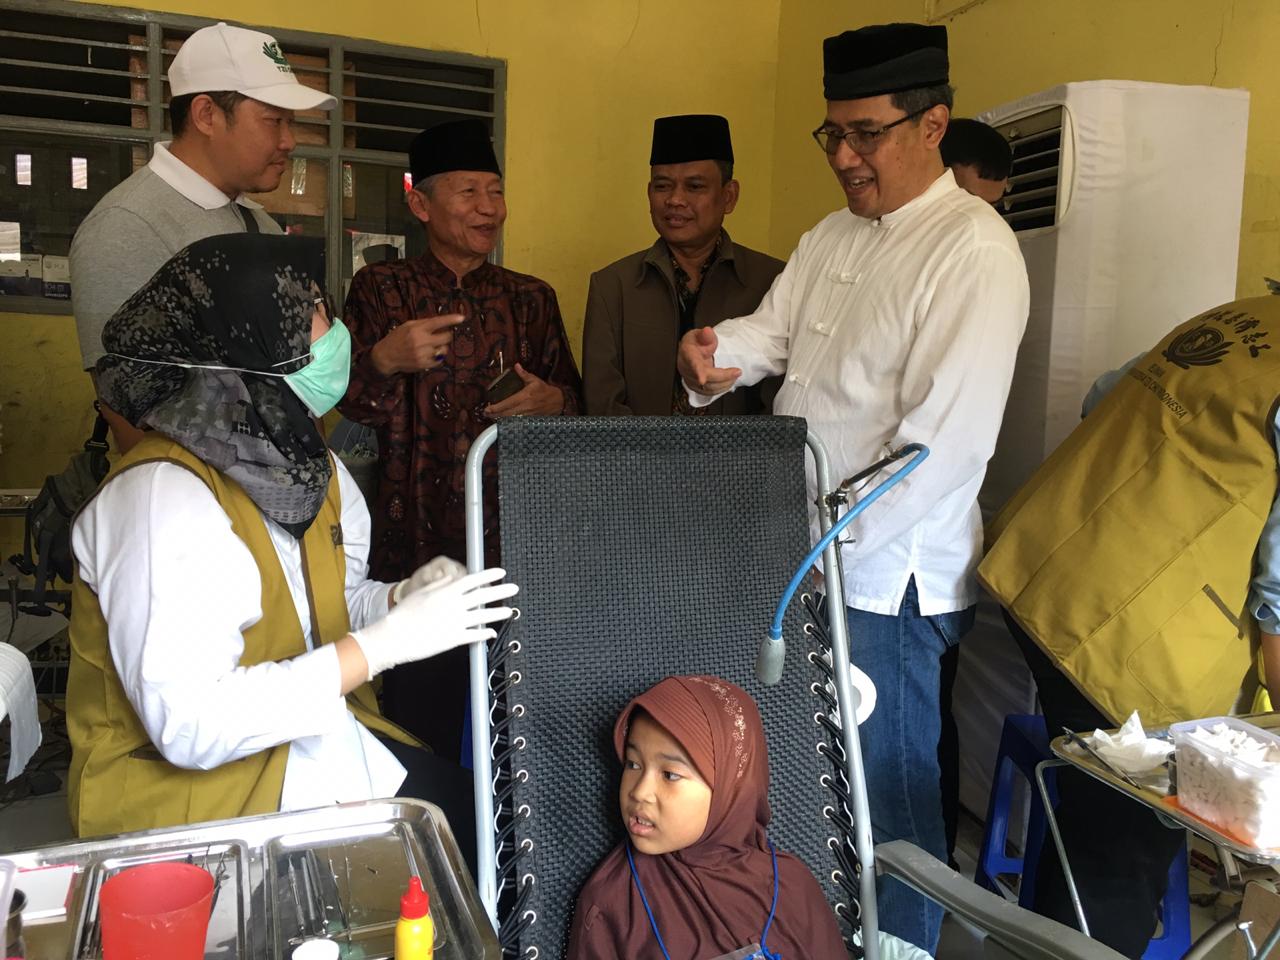 Dhony Rahajoe, Managing Director President Office Sinar Mas Land saat memberikan bantuan kepada warga di kampung Pagerhaur, Desa Pagedangan, Kecamatan Pagedangan, Kabupaten Tangerang.